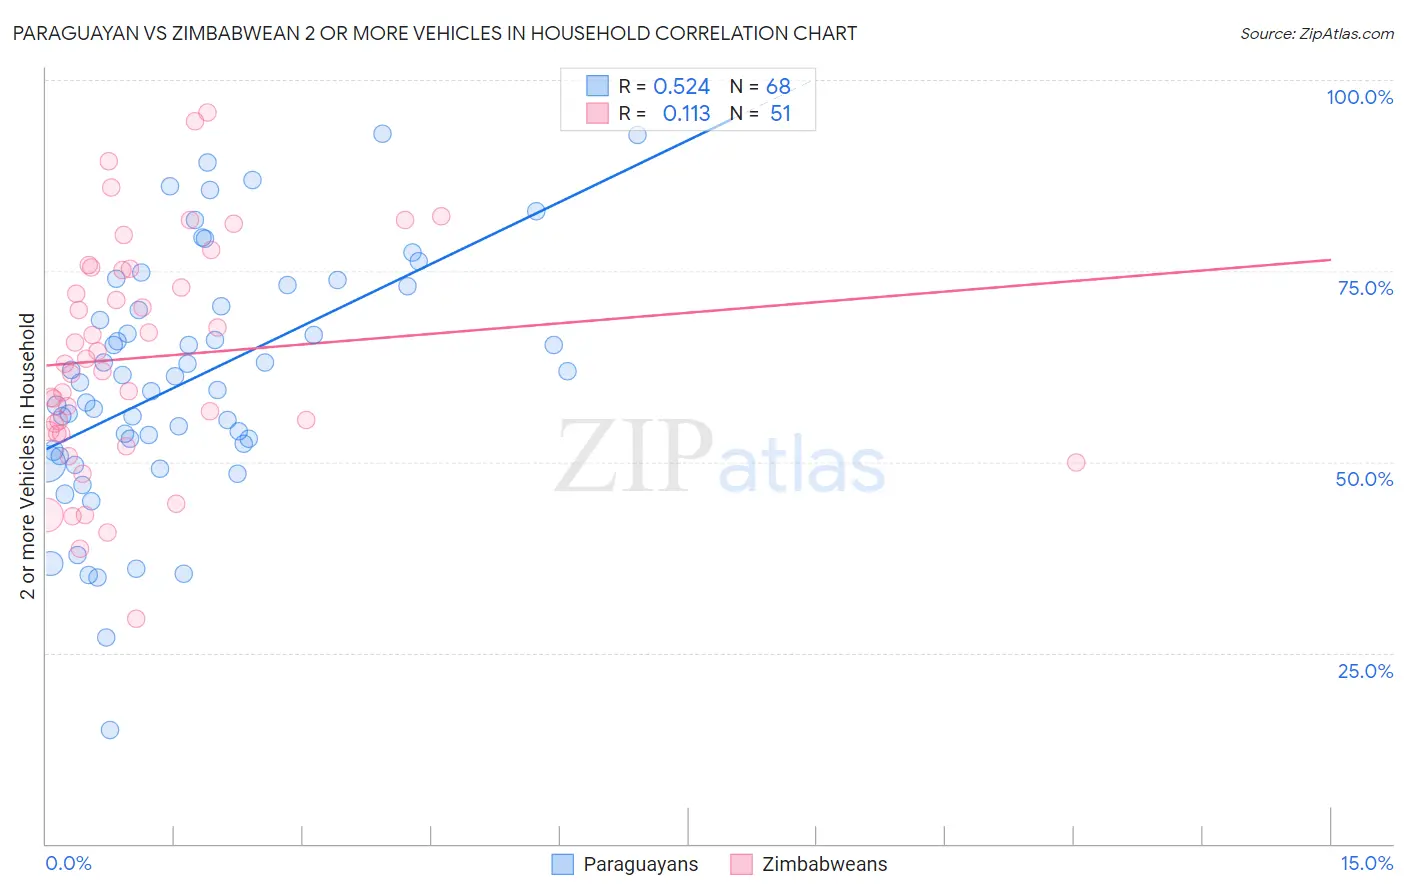 Paraguayan vs Zimbabwean 2 or more Vehicles in Household